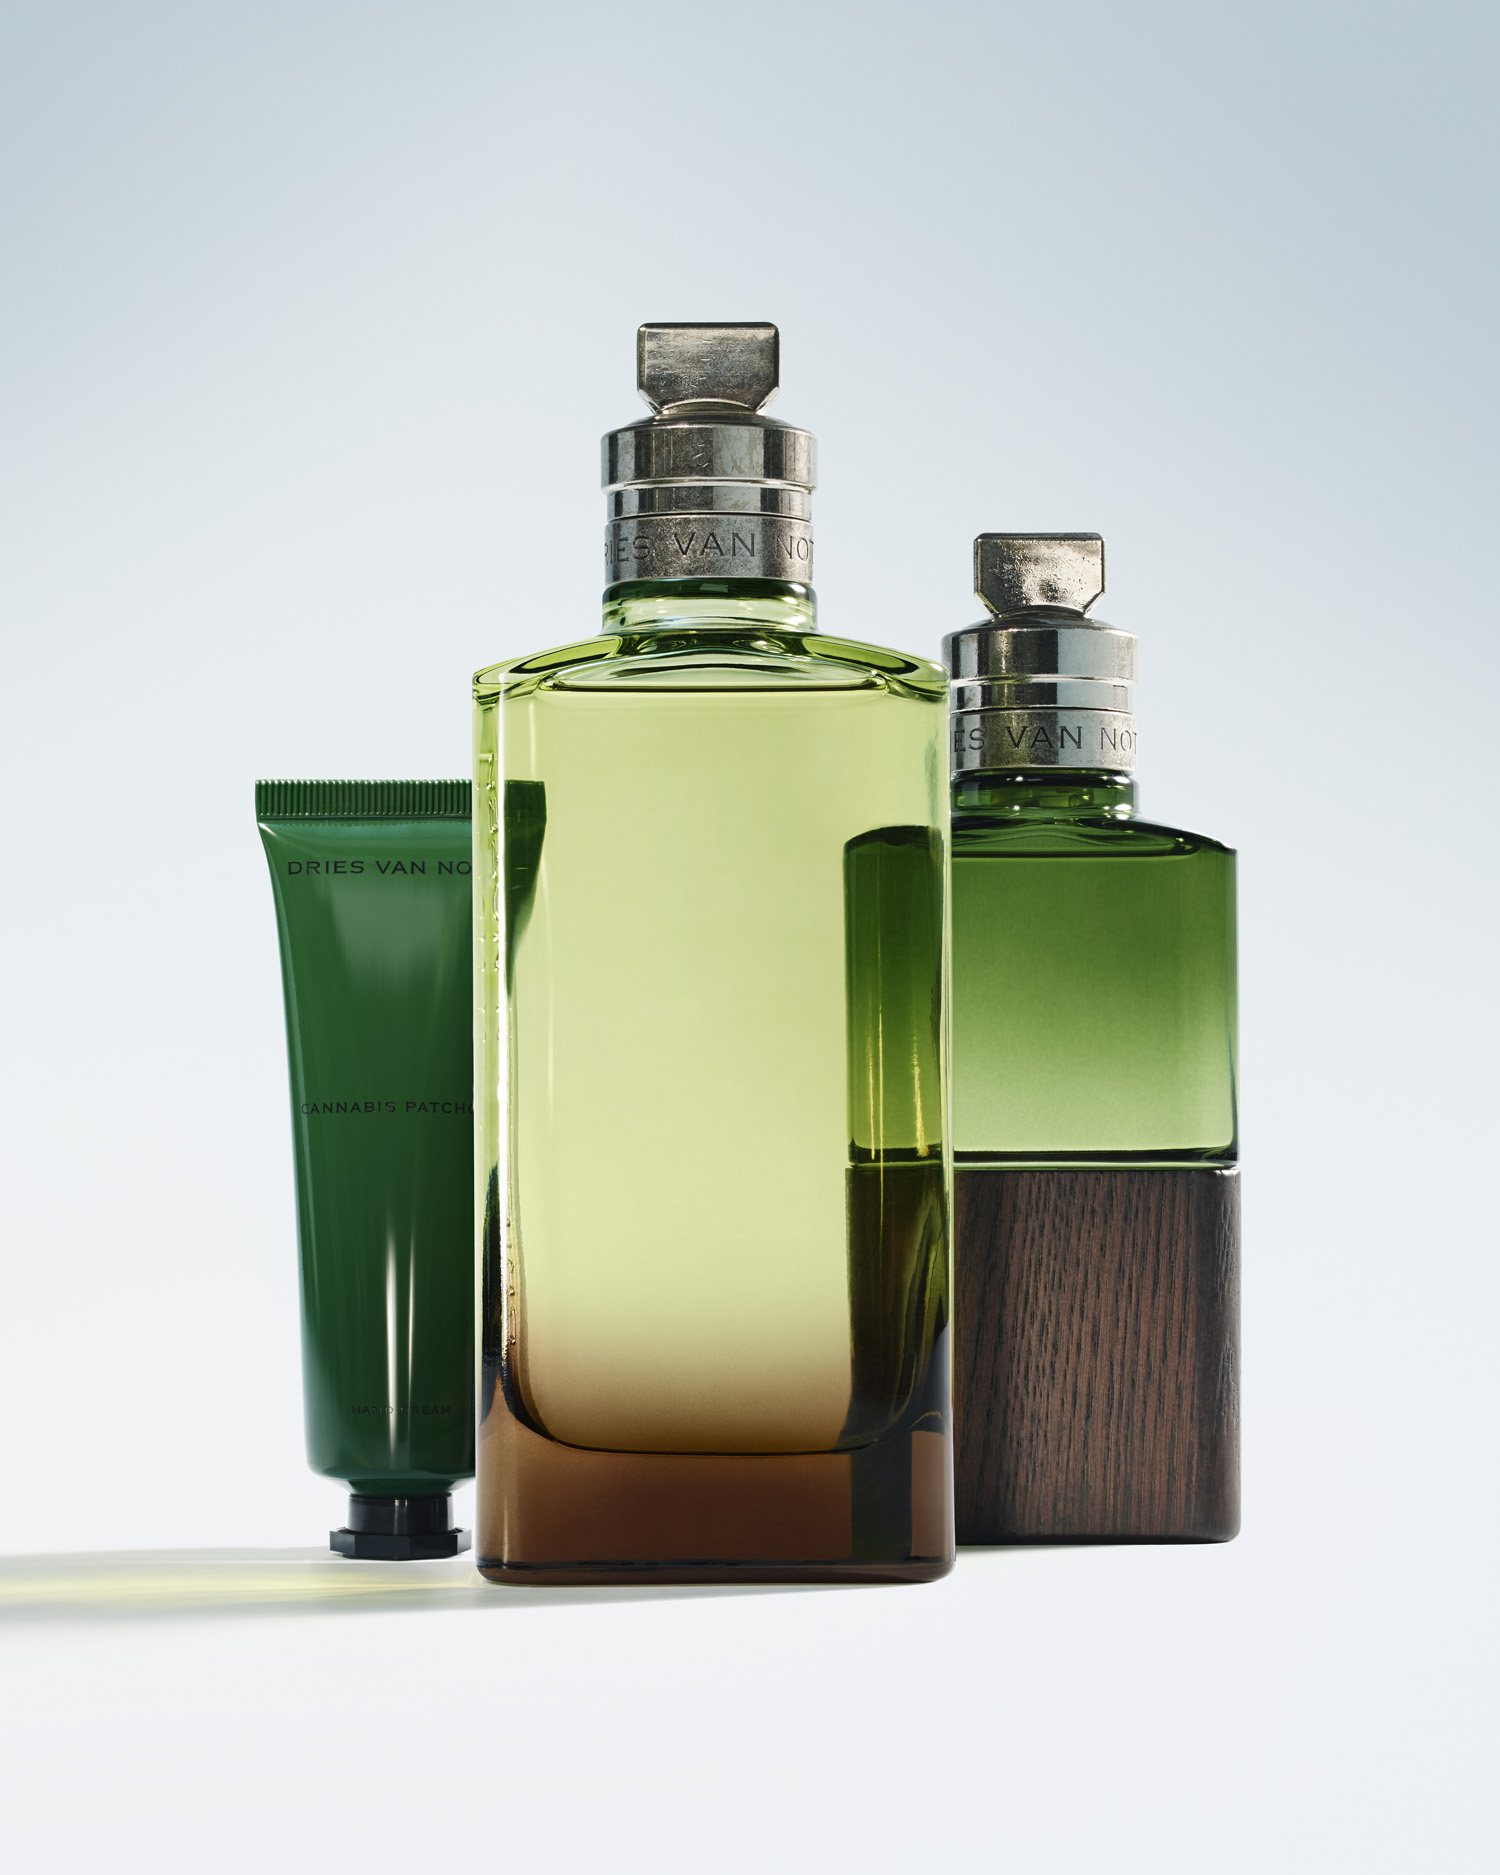 Dries Van Noten Mystic Moss perfume bottles and Cannabis Patchouli hand cream